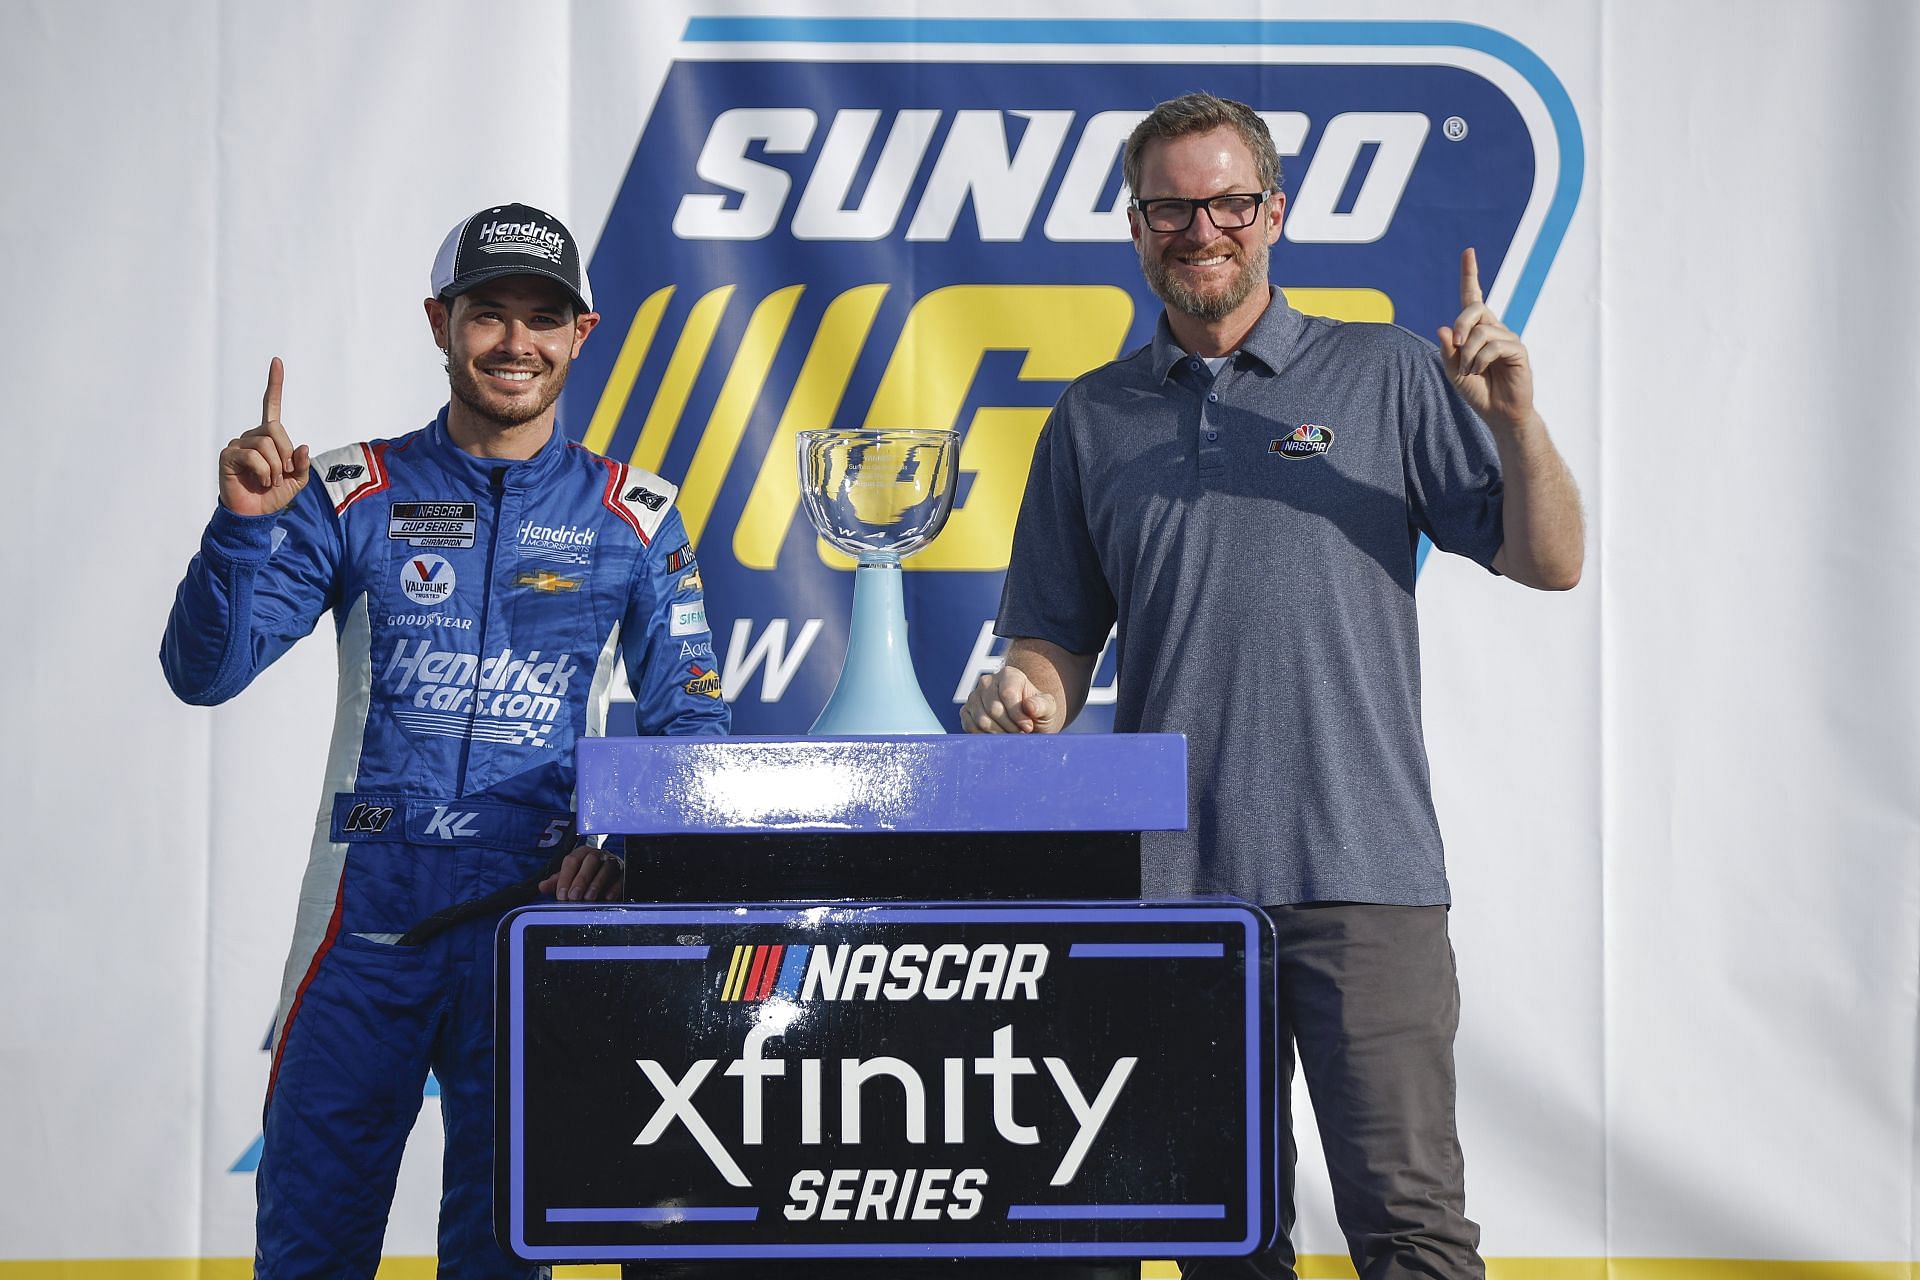 NASCAR Xfinity Series Sunoco Go Rewards 200 at The Glen